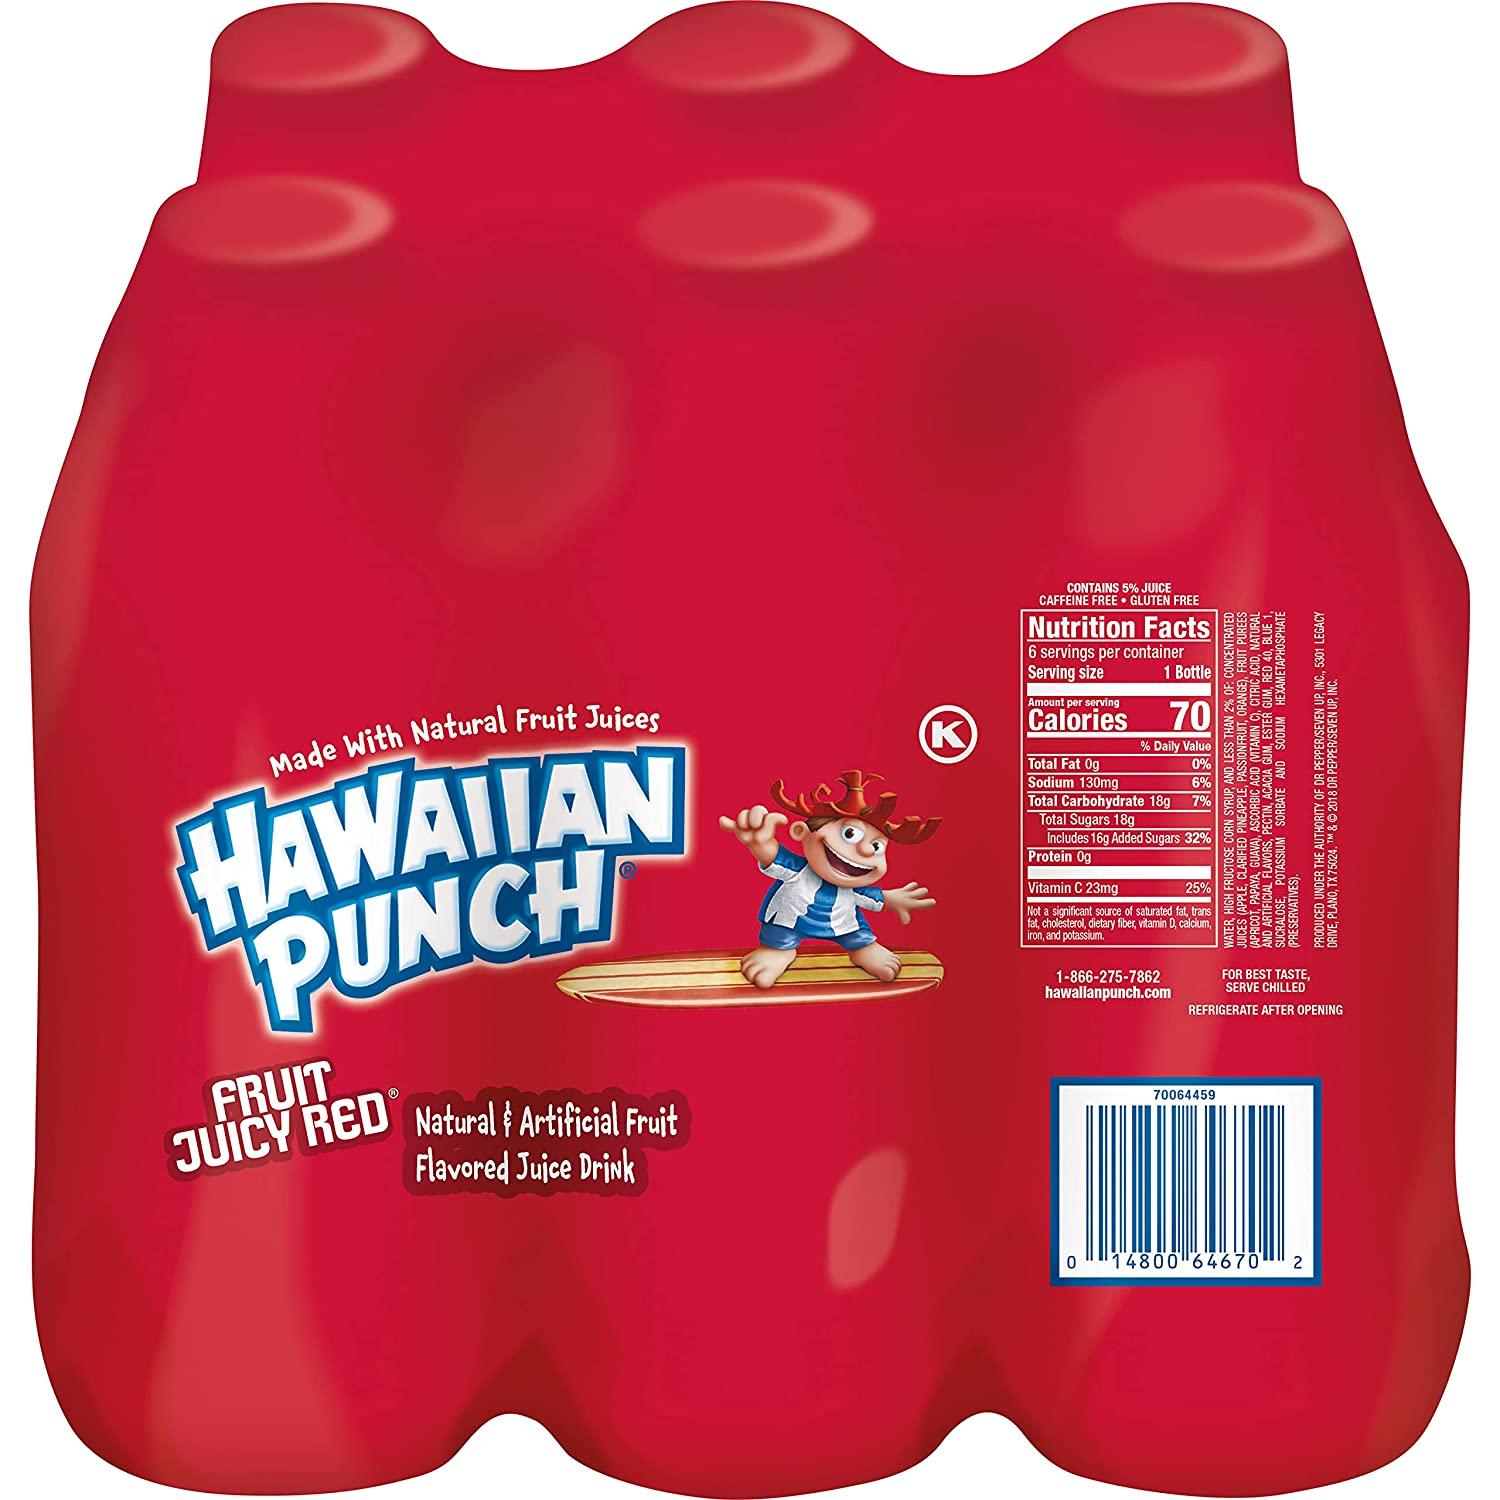 Hawaiian Punch Fruit Juicy Red Juice Drink 12 oz Cans